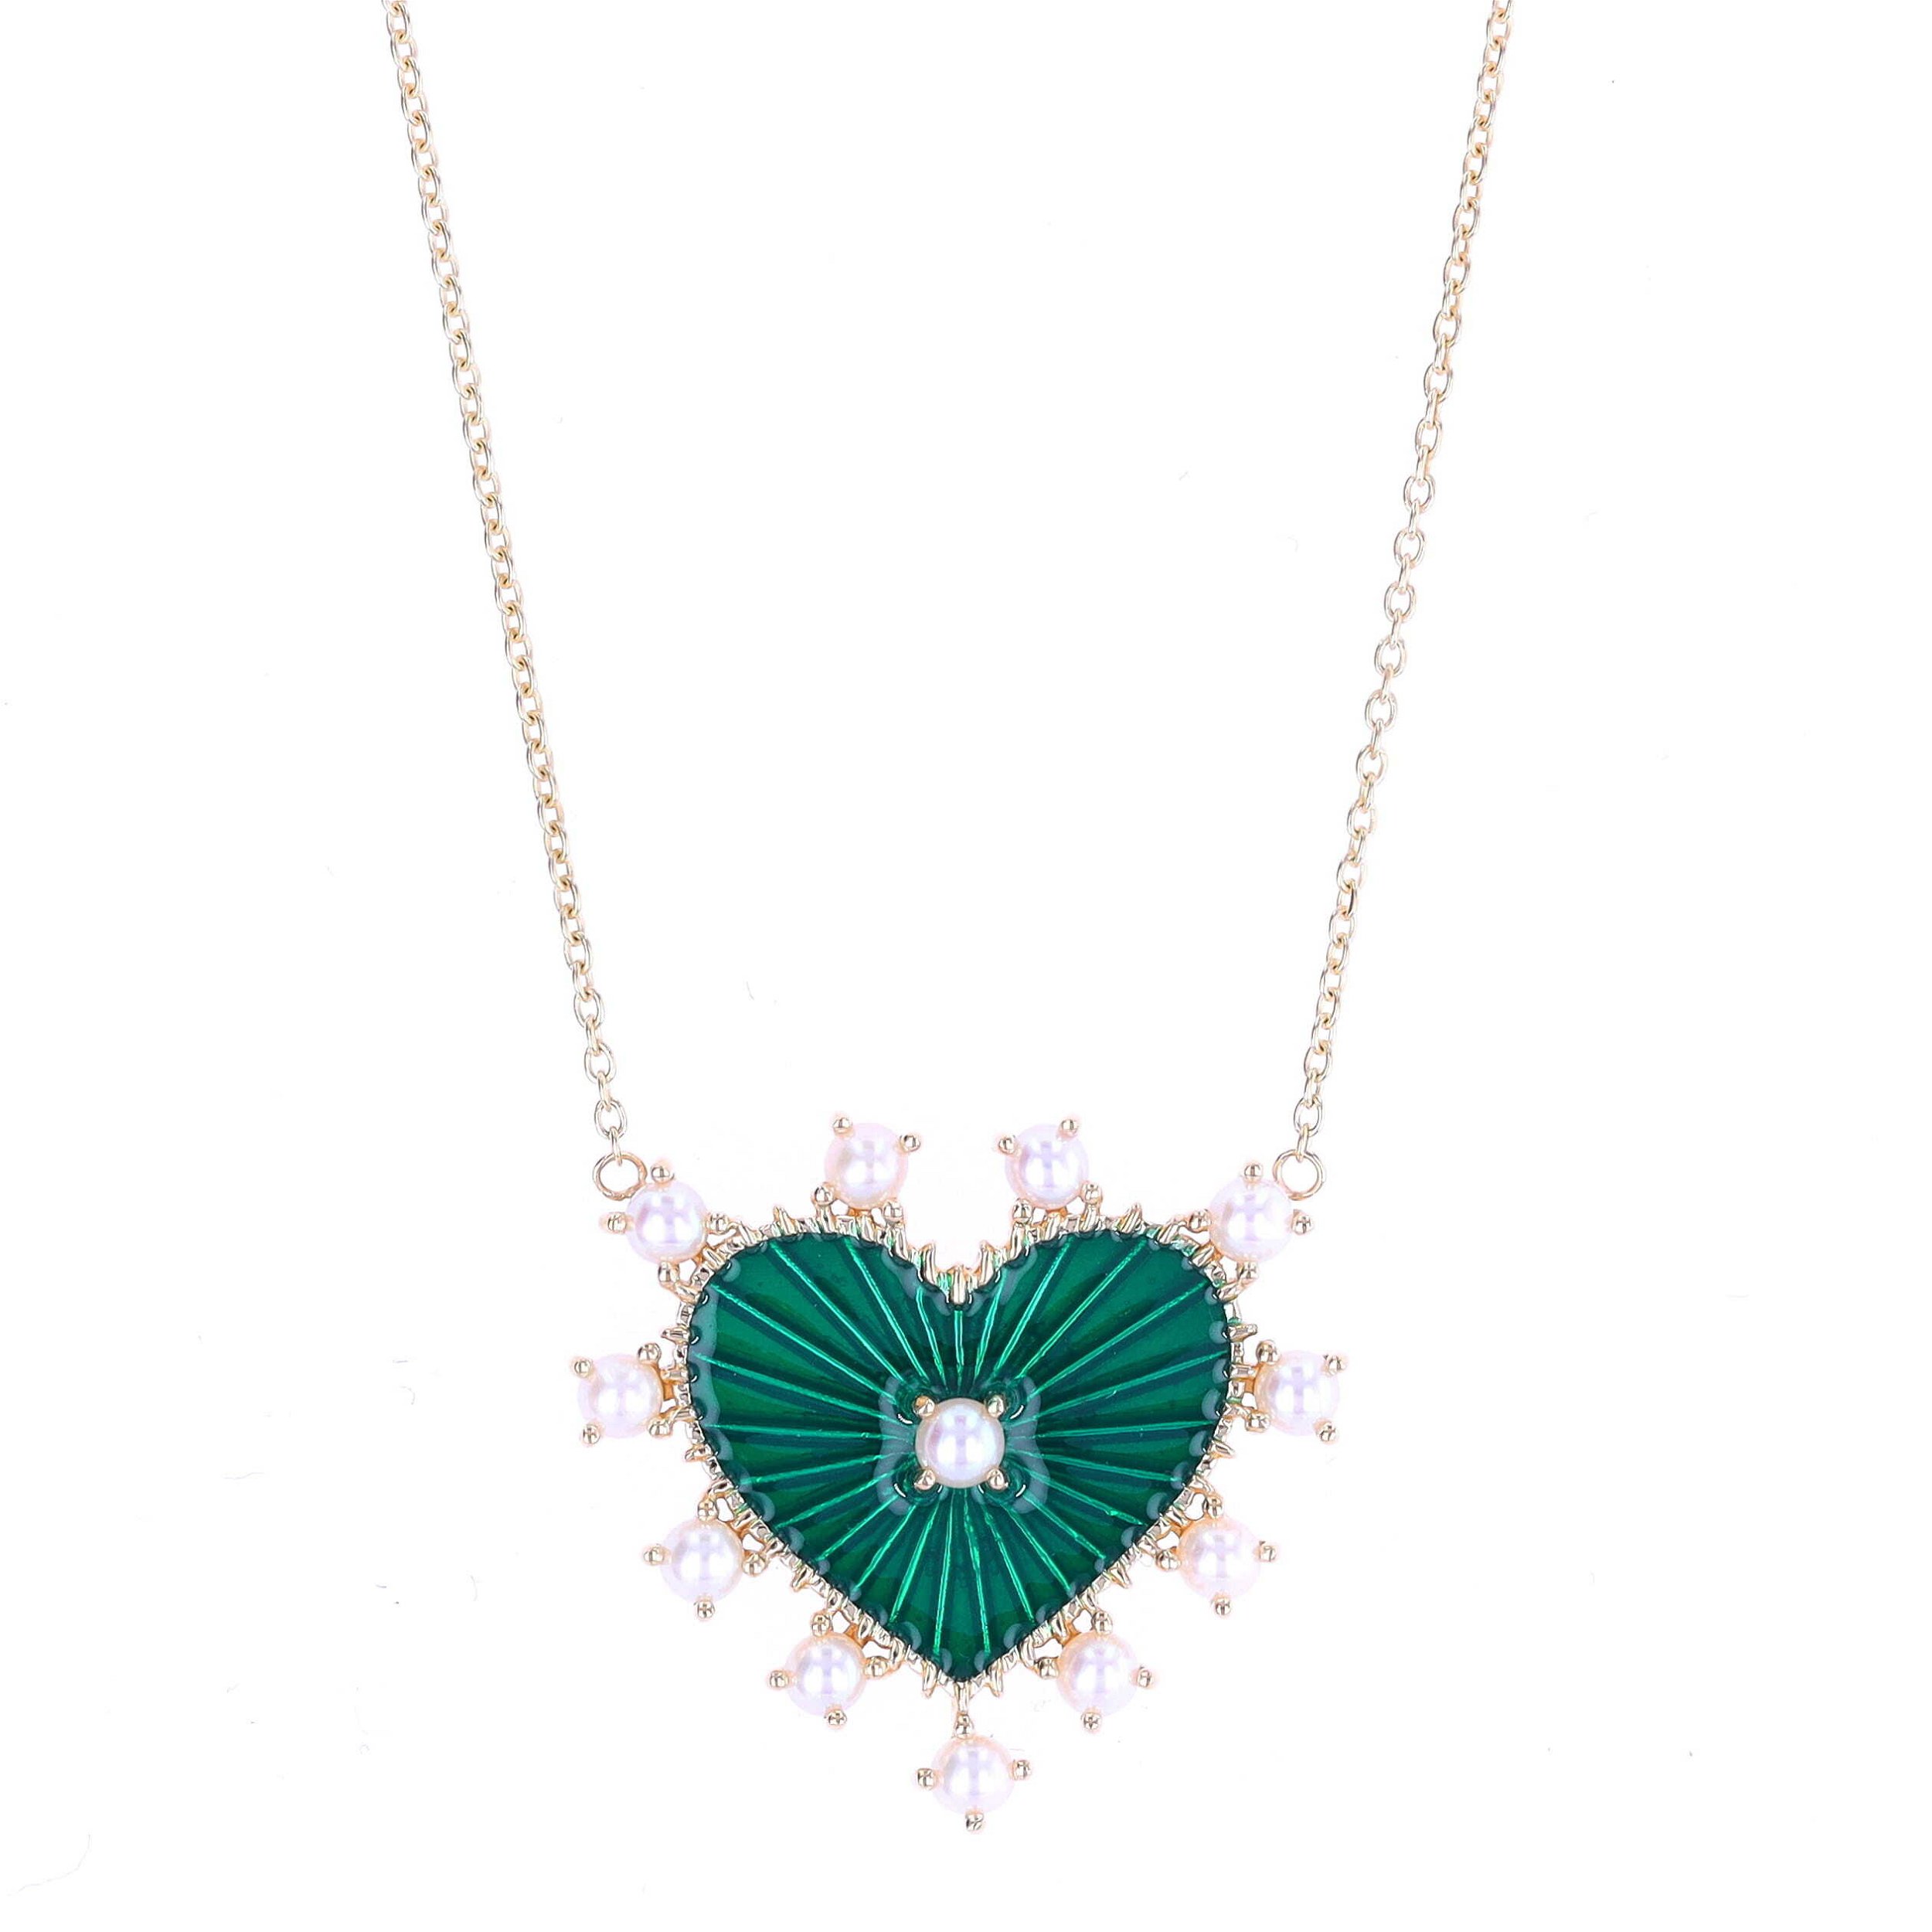 18" 14k Yellow Gold Dark Green Enamel Heart Pendant Necklace with Pearl Bezel